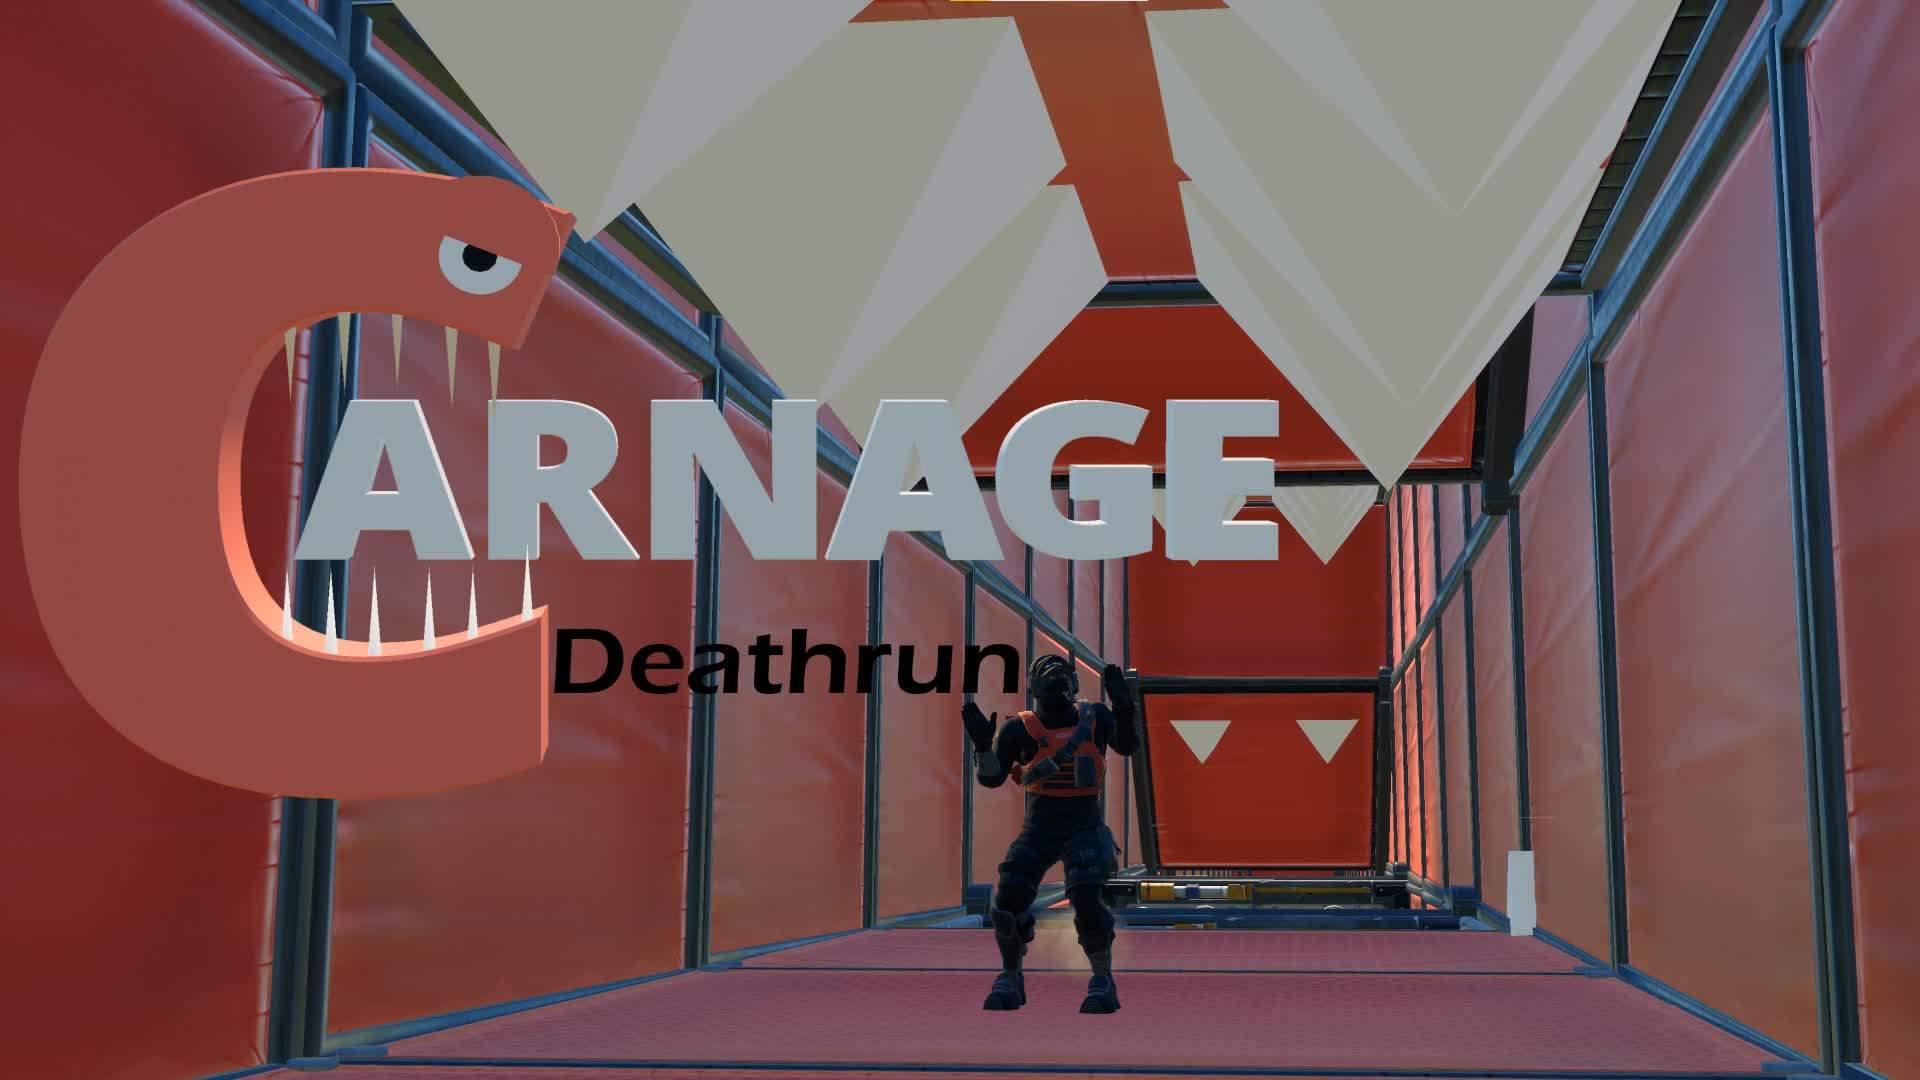 Carnage Deathrun